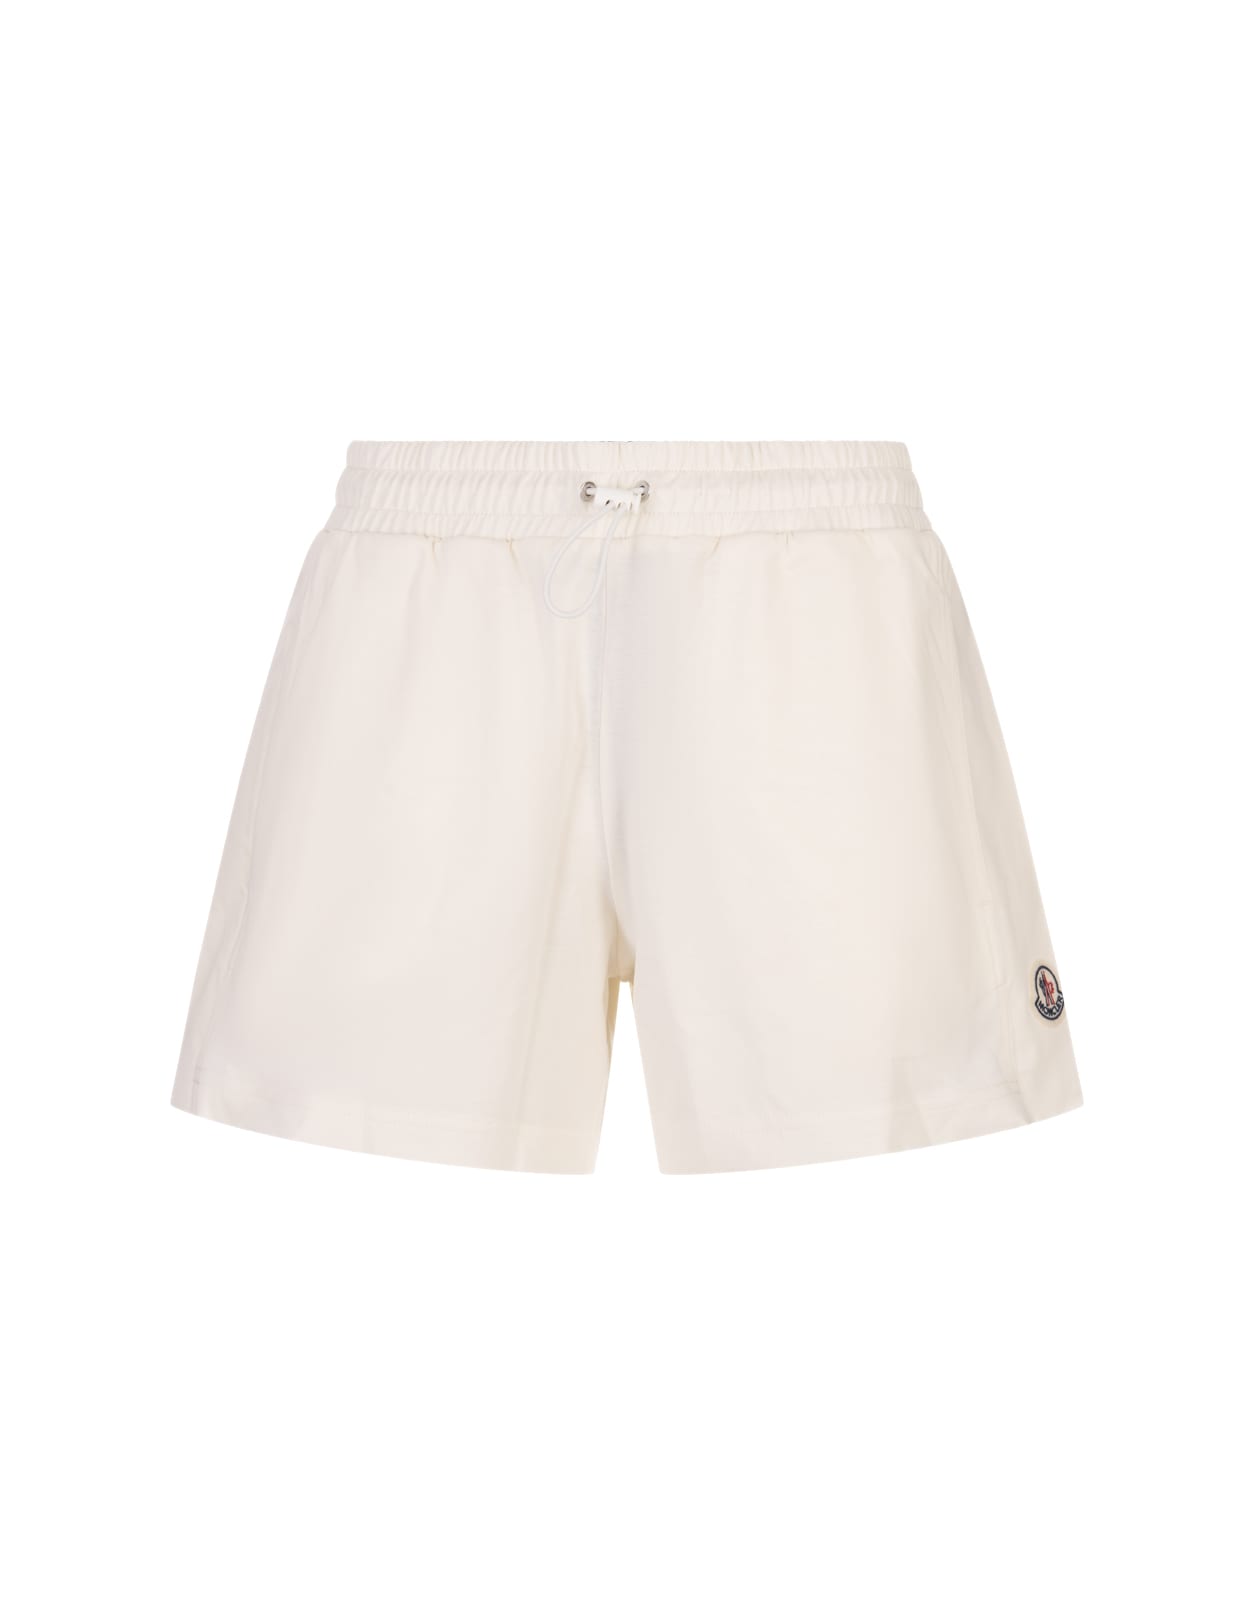 White Jersey Shorts